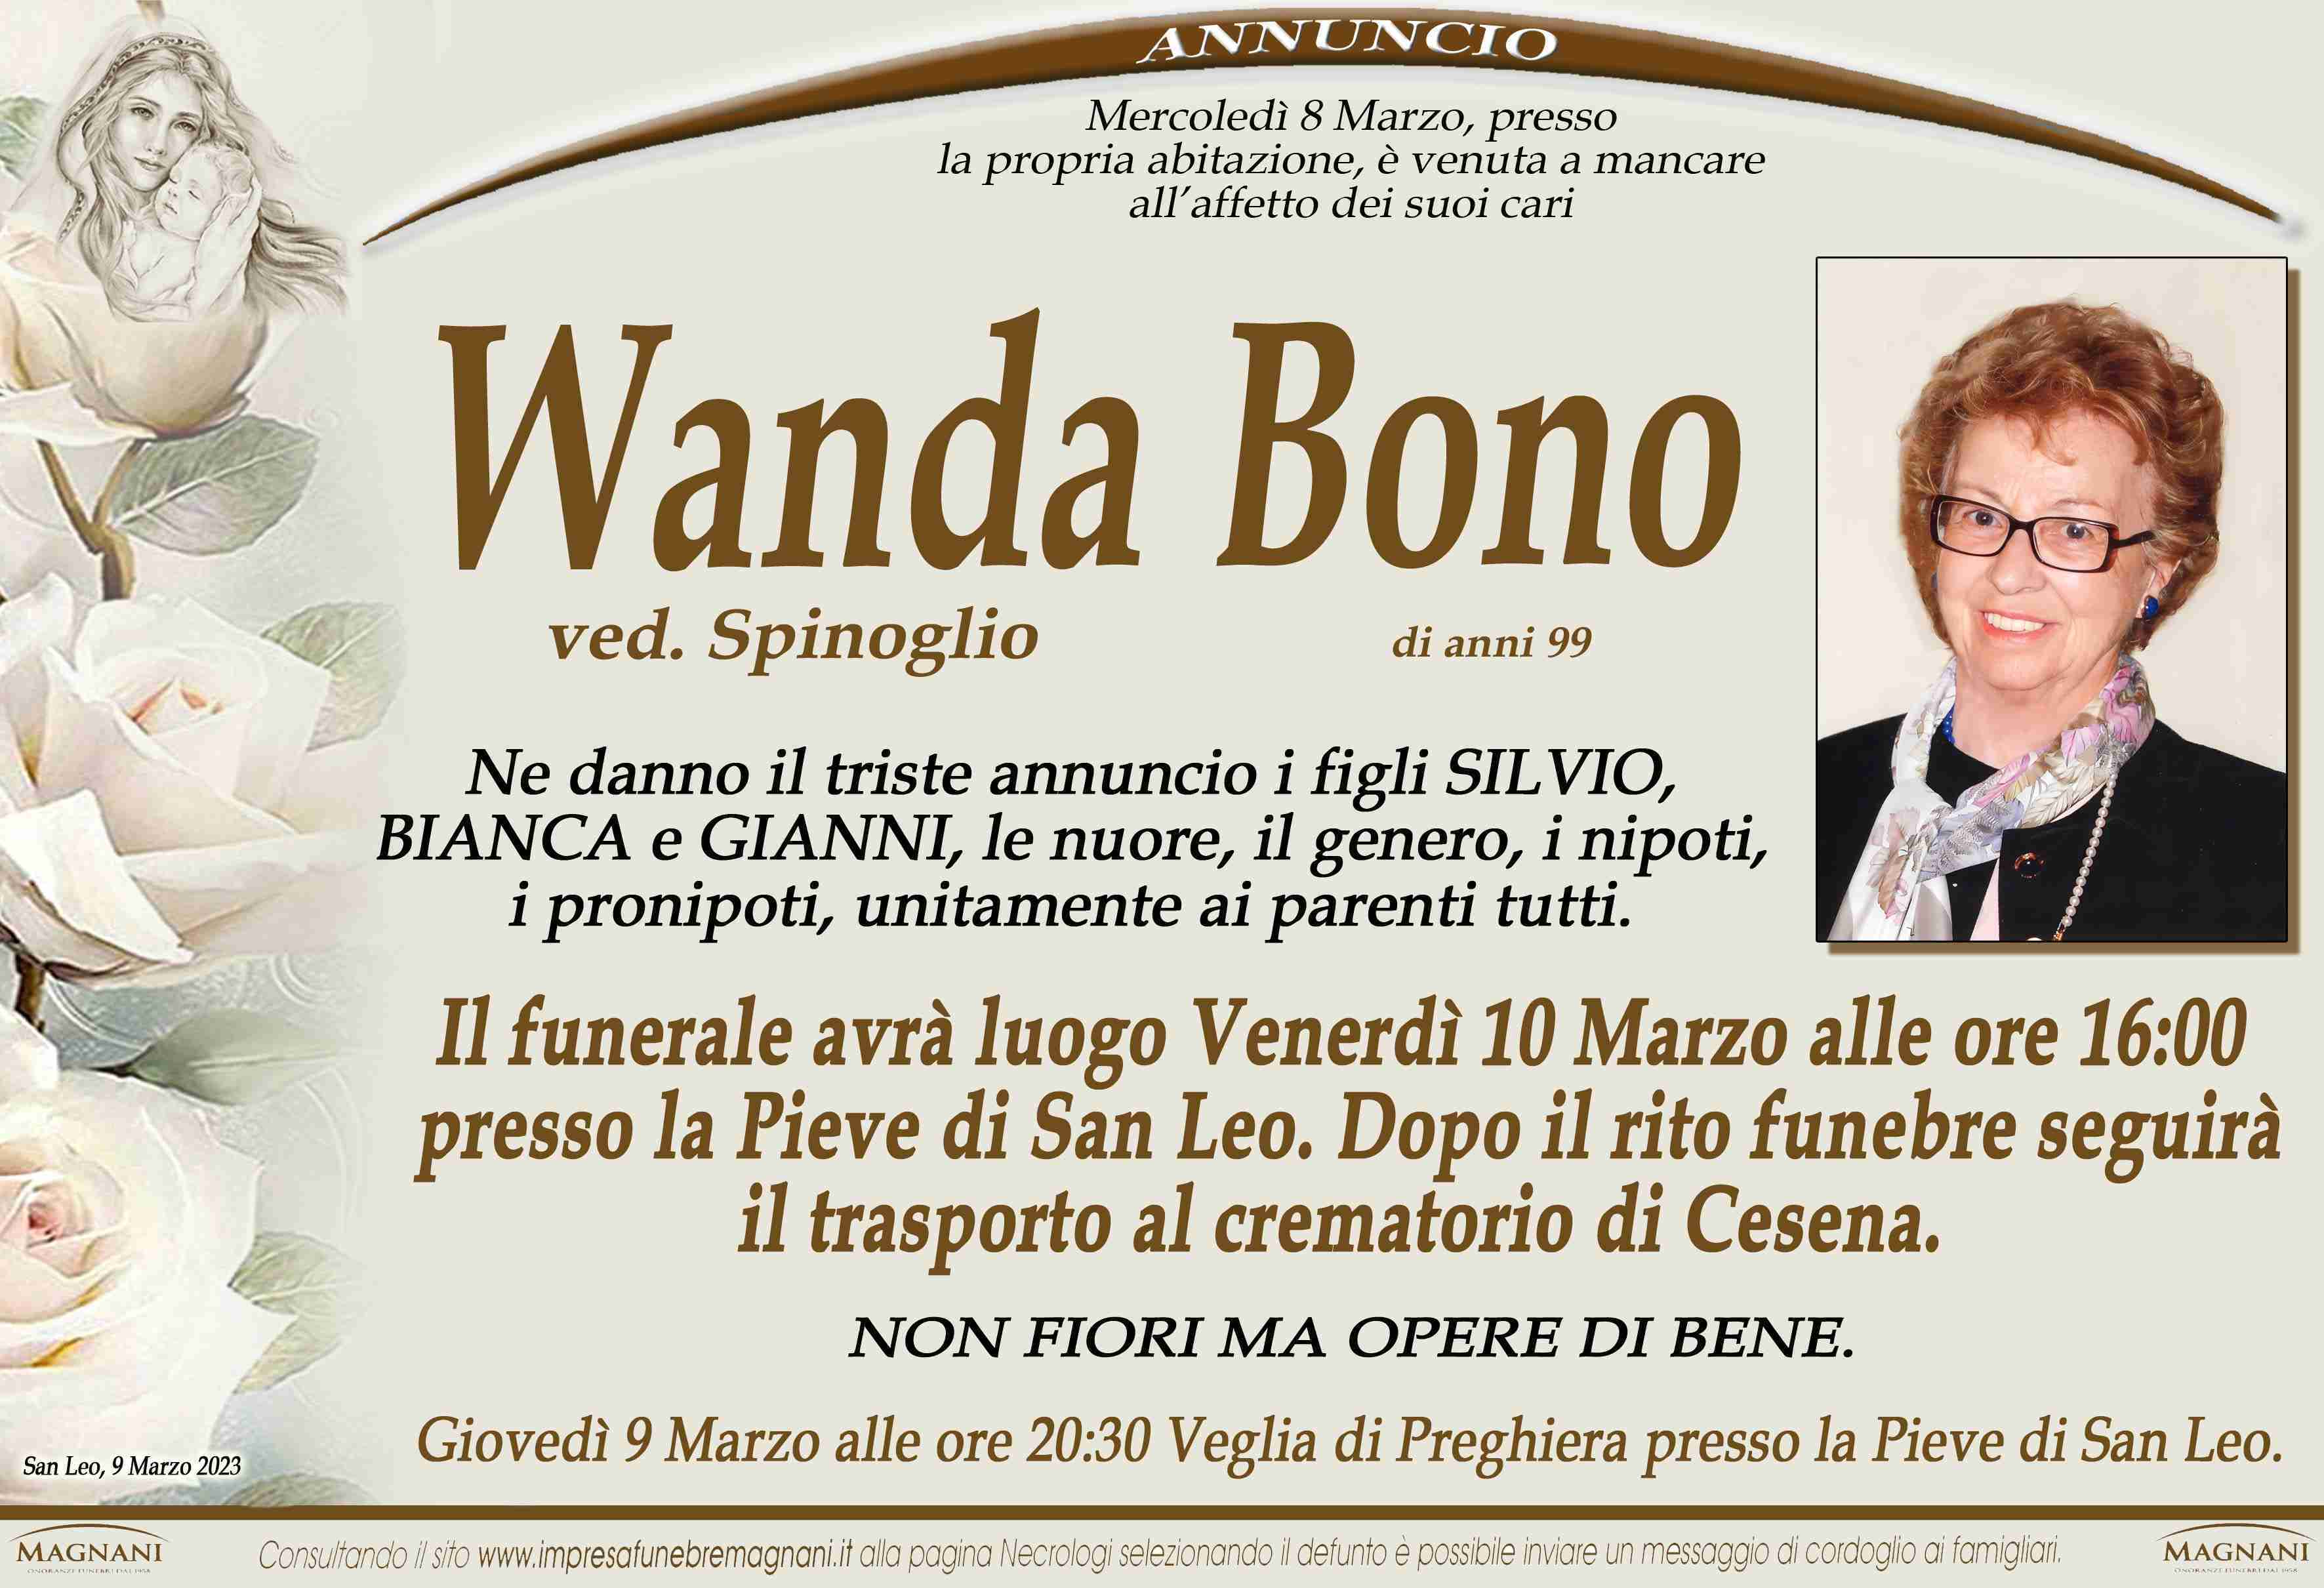 Wanda Bono